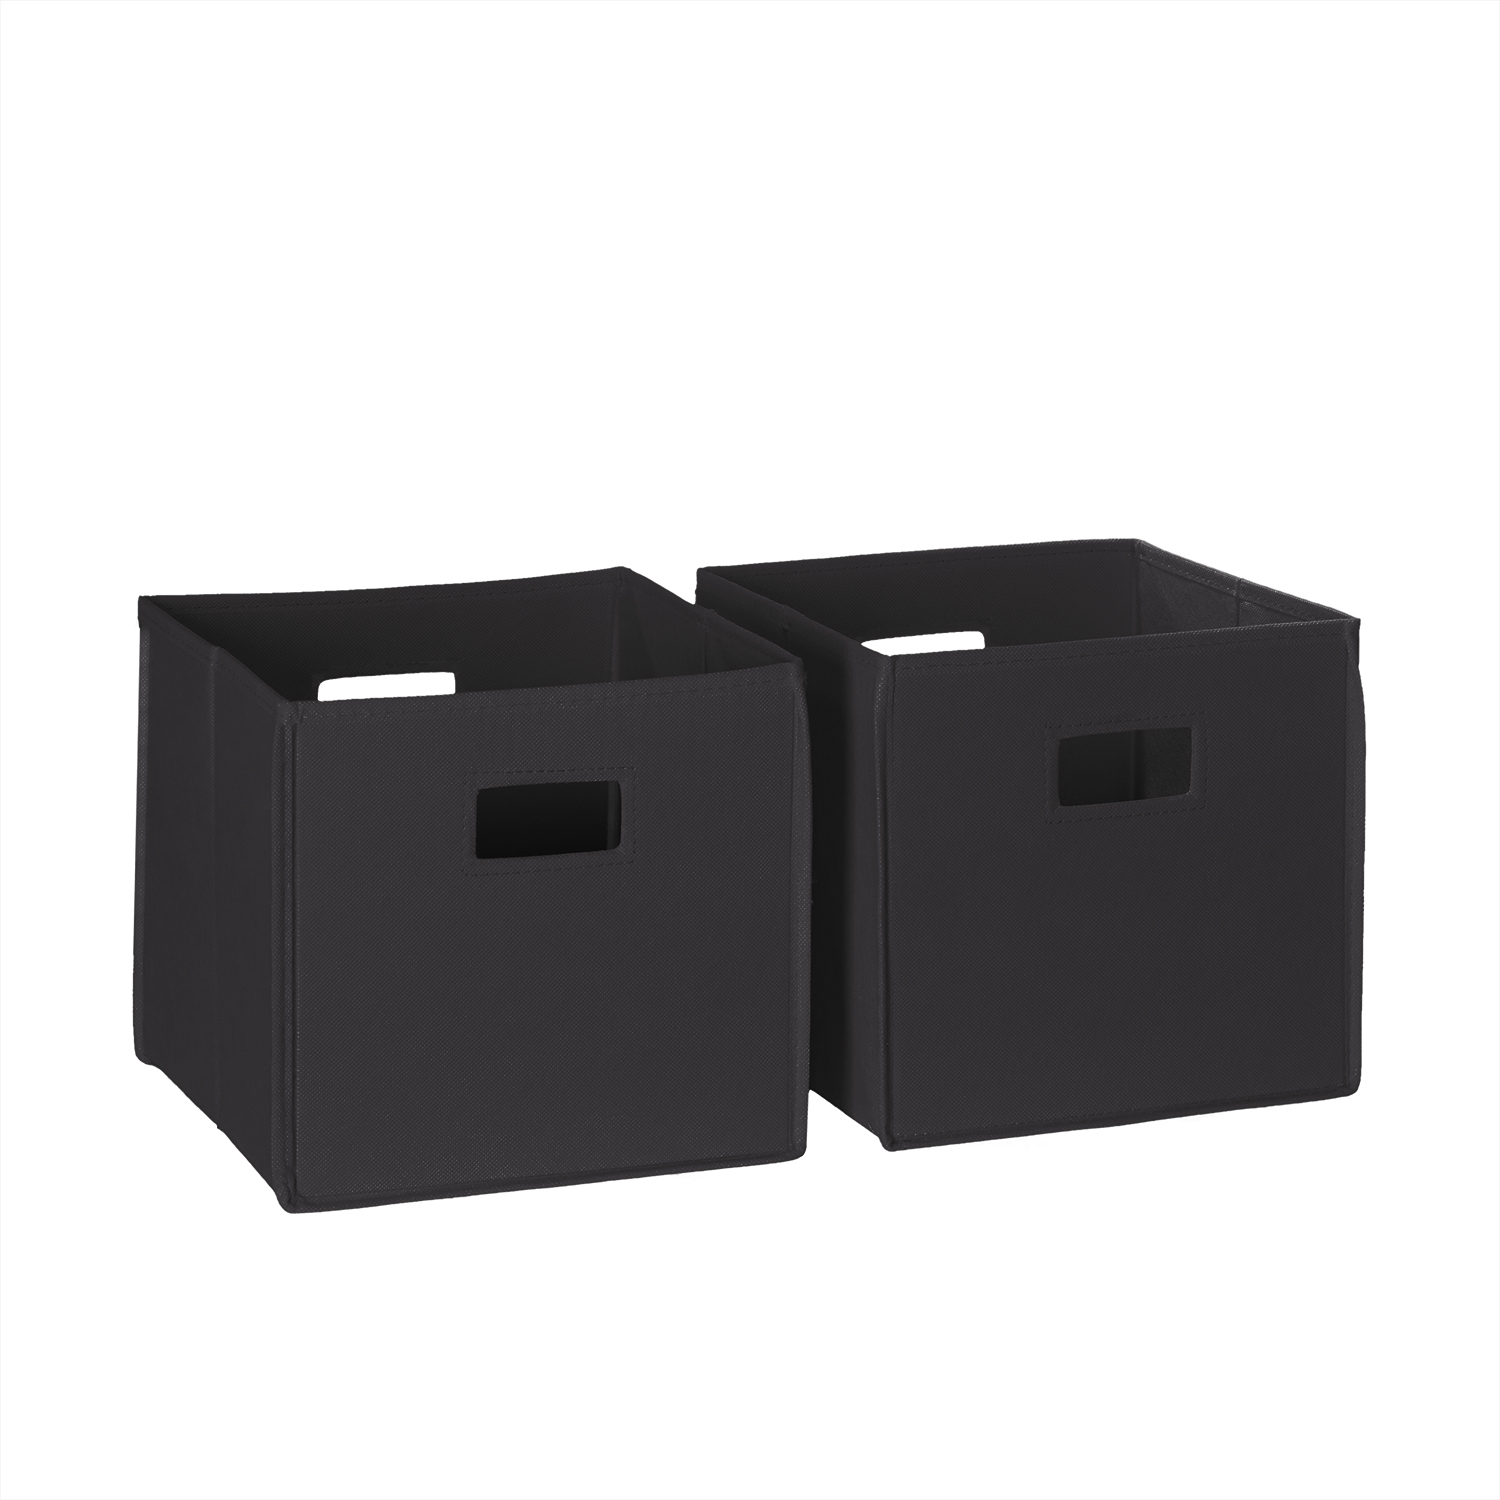 RiverRidge Home Folding Fabric Cube Storage Bin Set of 2 - Black - image 1 of 7